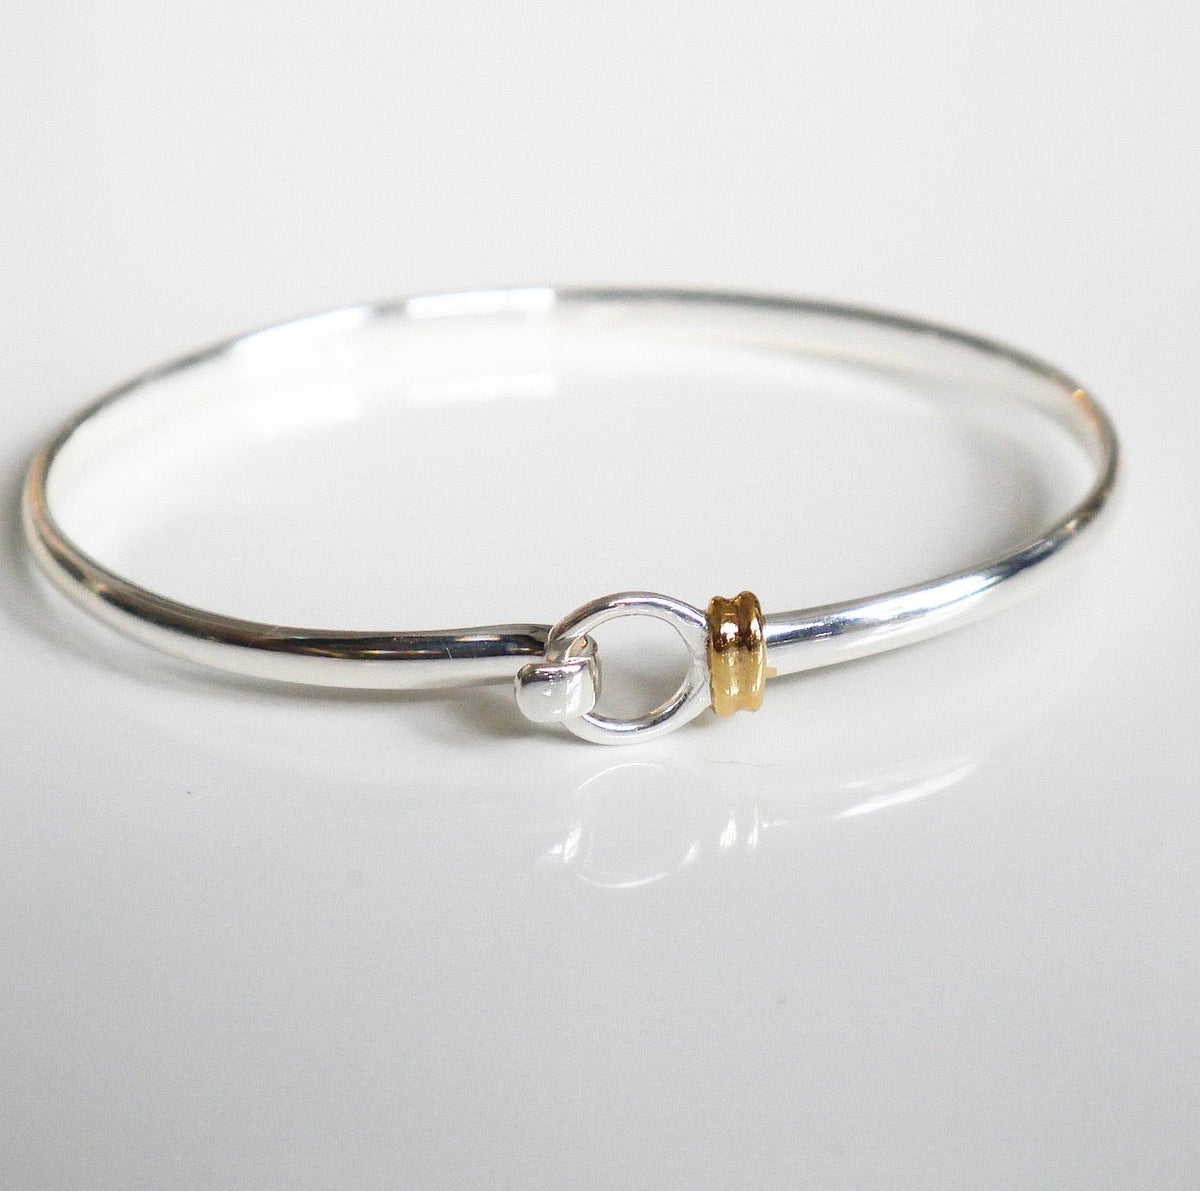 Horseback Silver Hook Bracelet – KESLEY